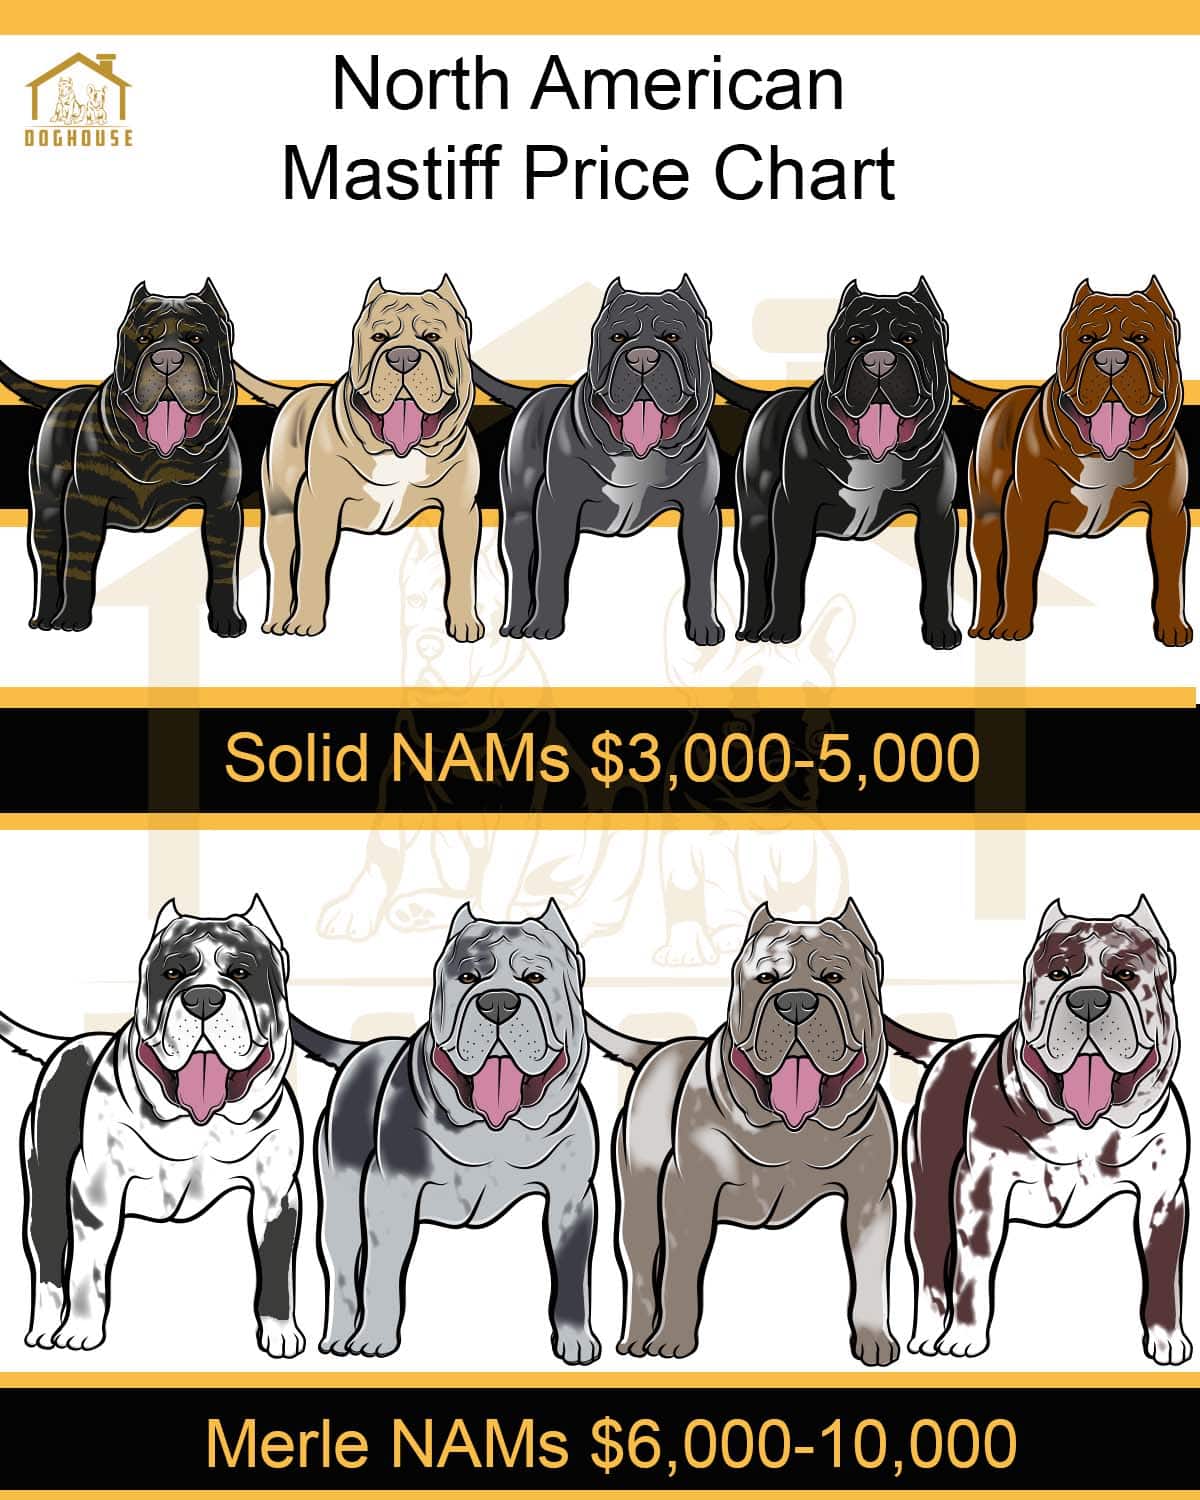 North American Mastiff Price Chart